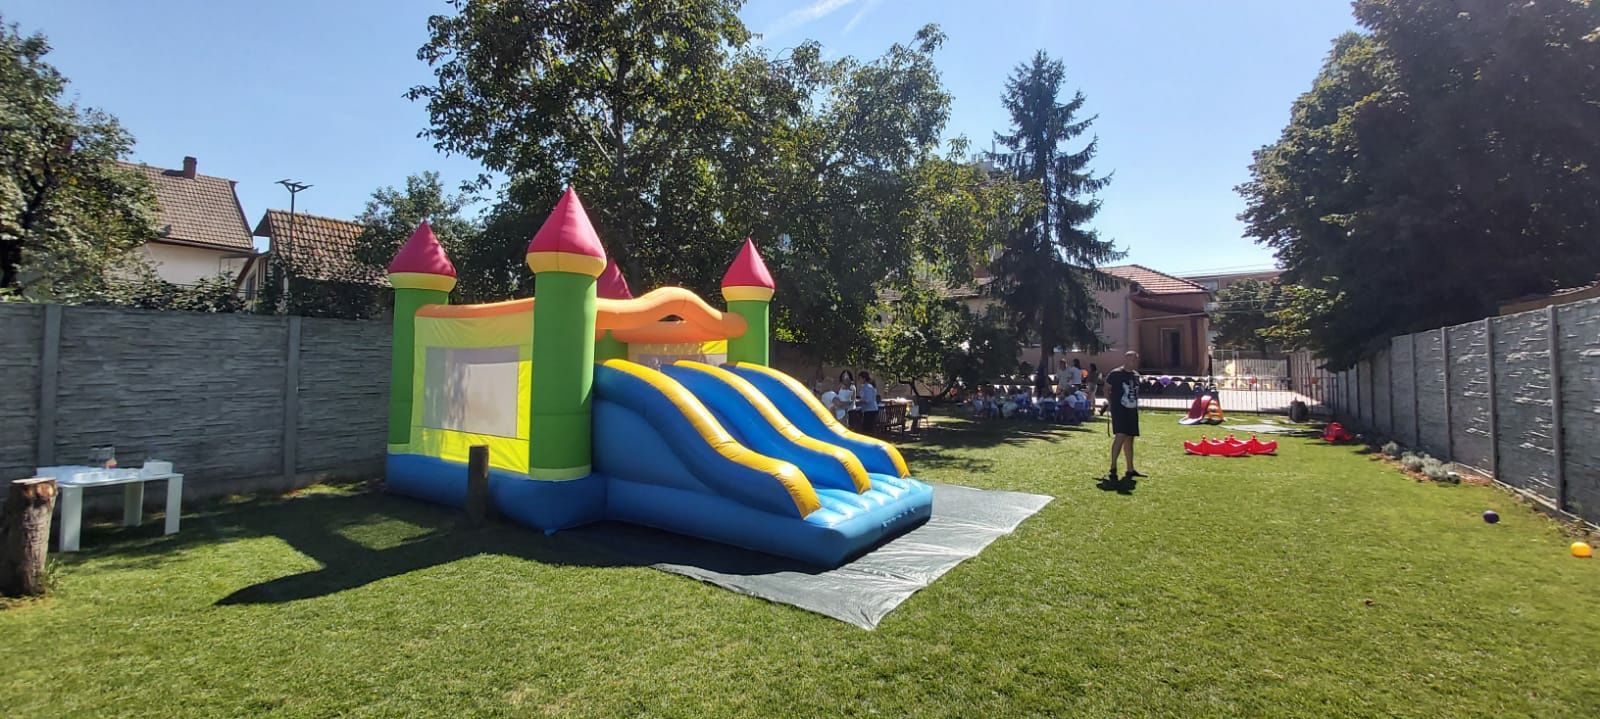 Inchiriez Topogane gonflabile pentru petreceri copii